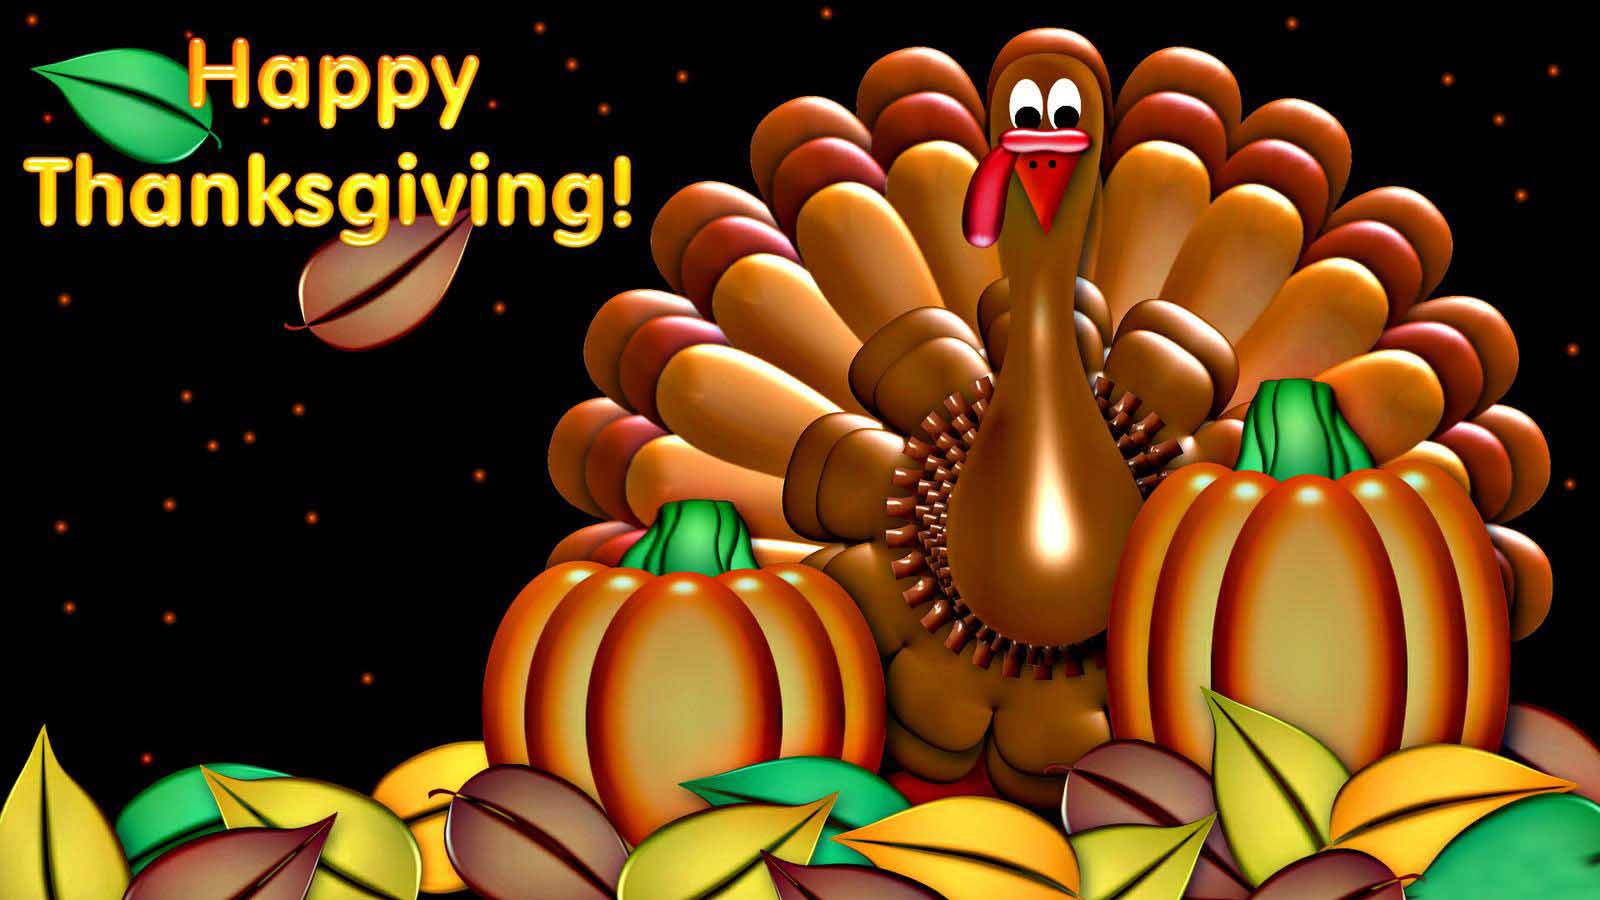 Yummy Thanksgiving Turkey Wallpaper for Desktop